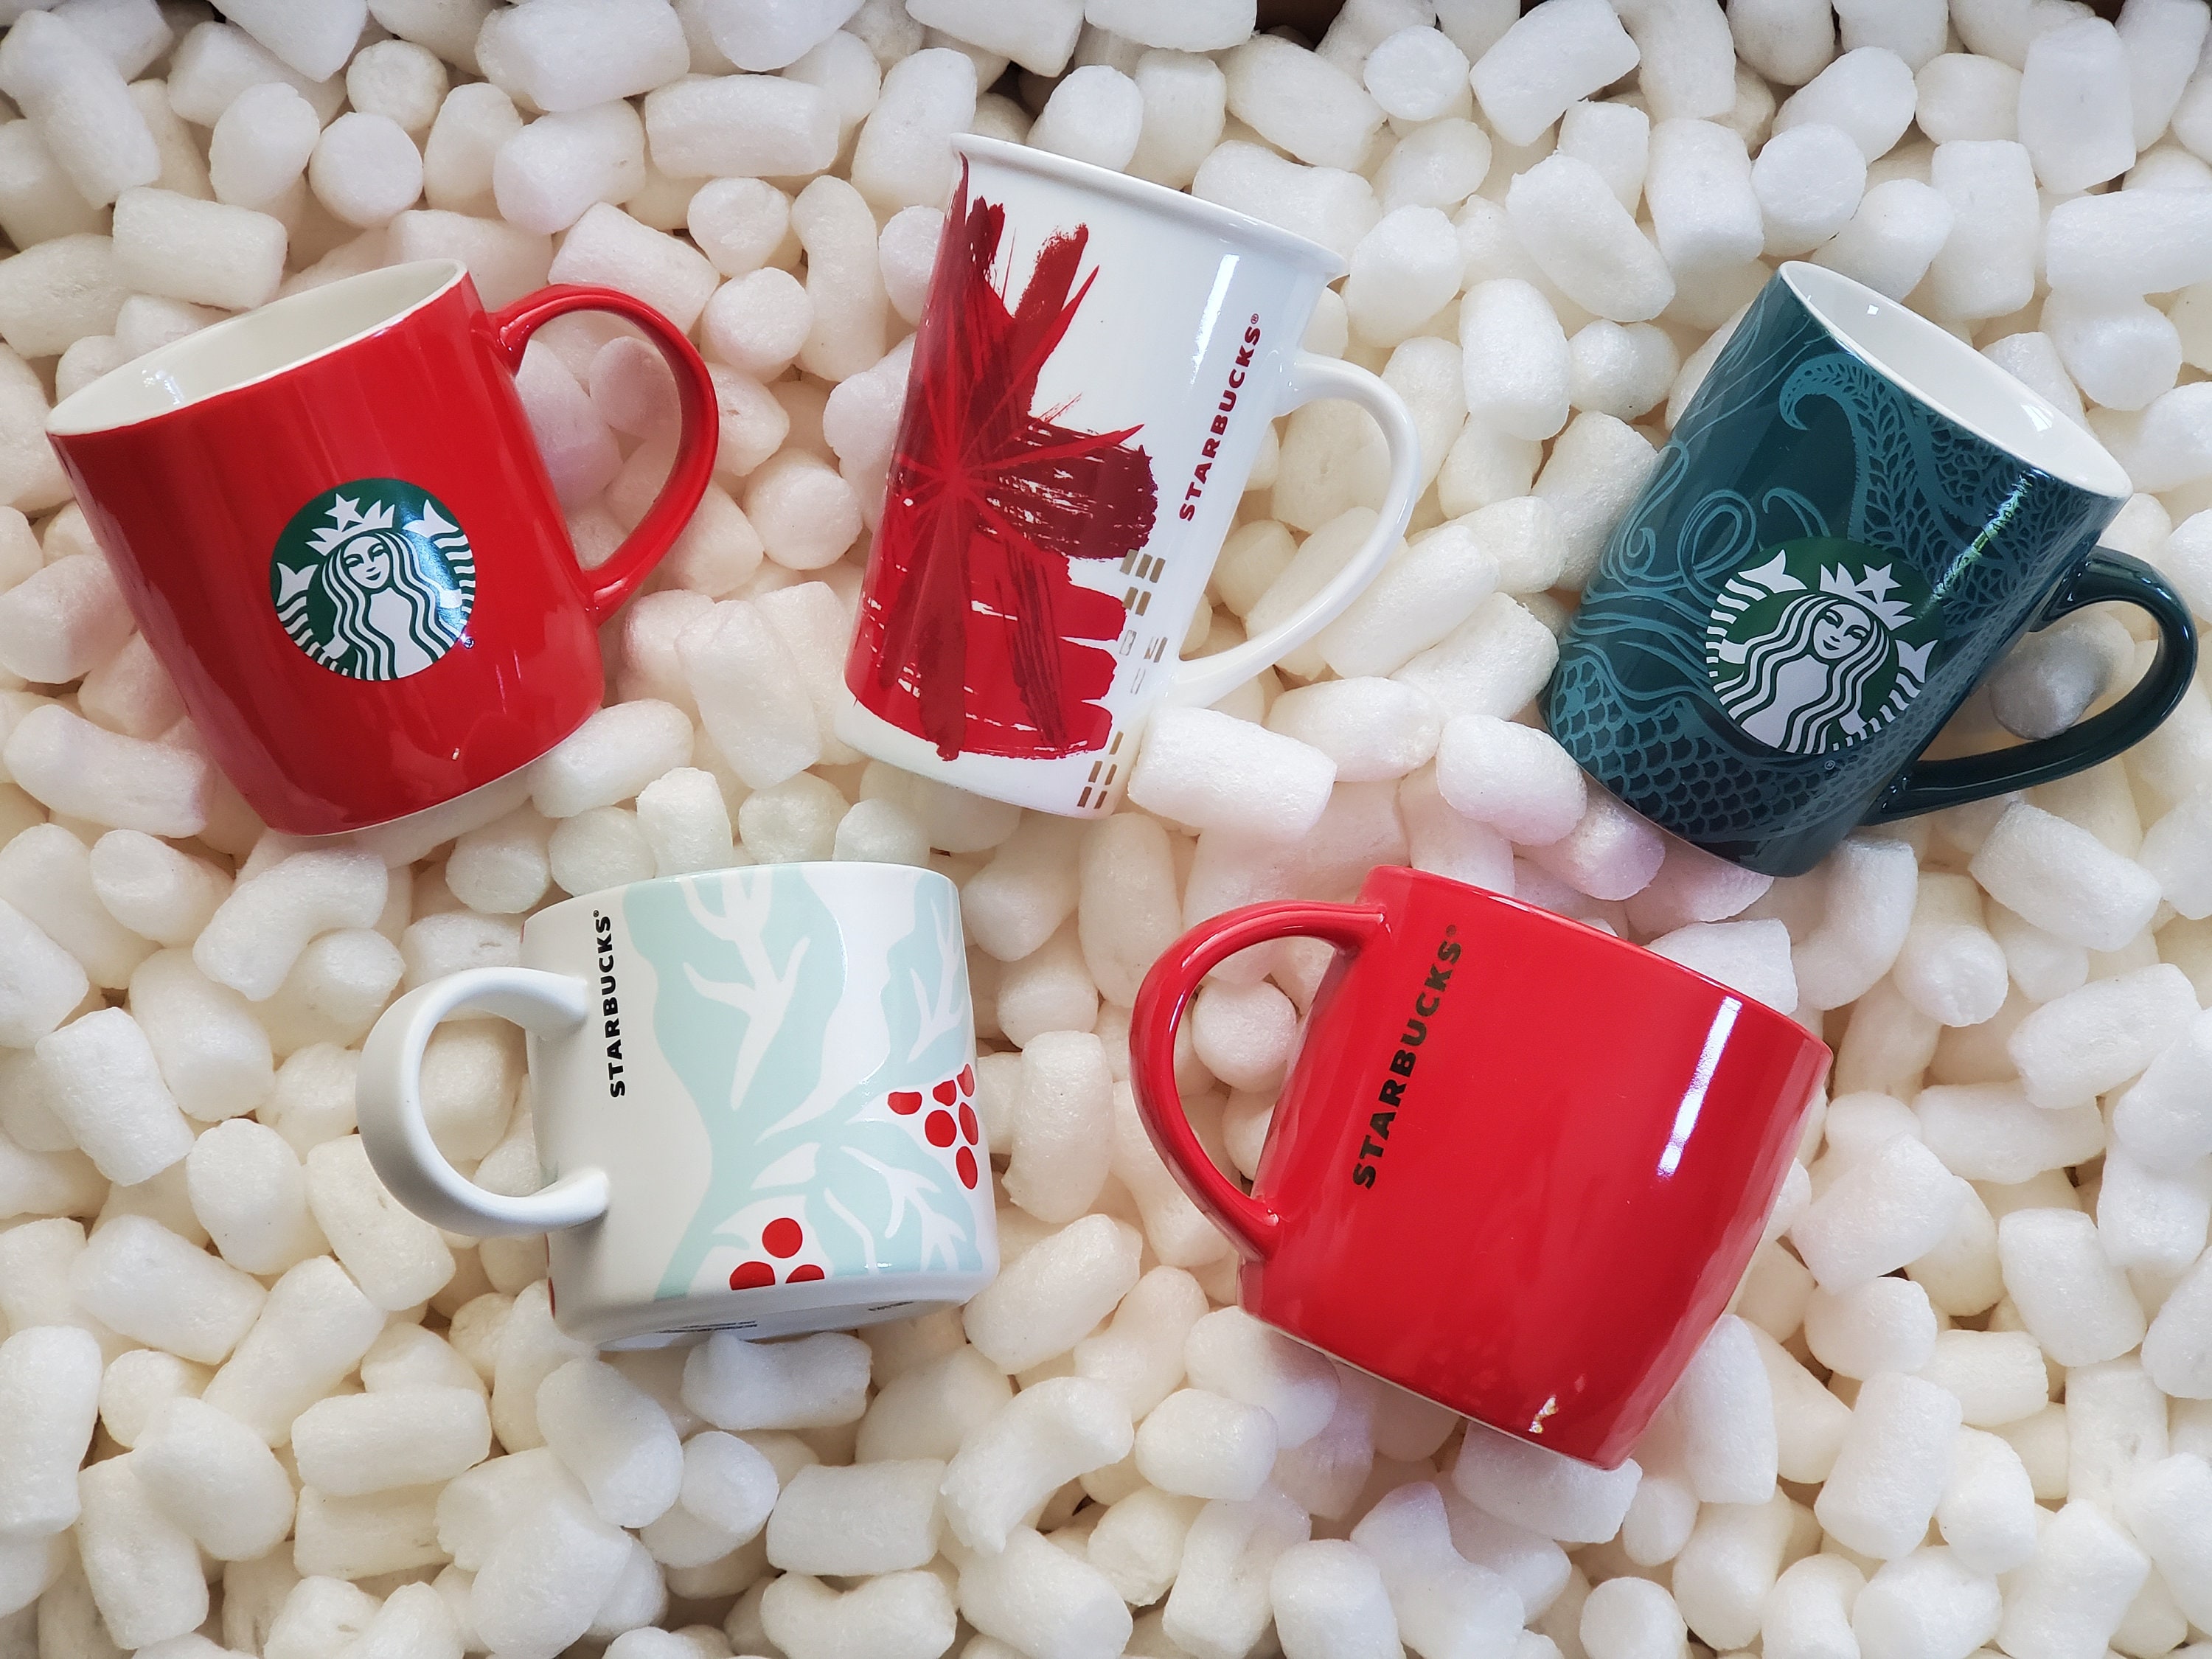 Starbucks Holiday Christmas Mug Cup Sold Separately 